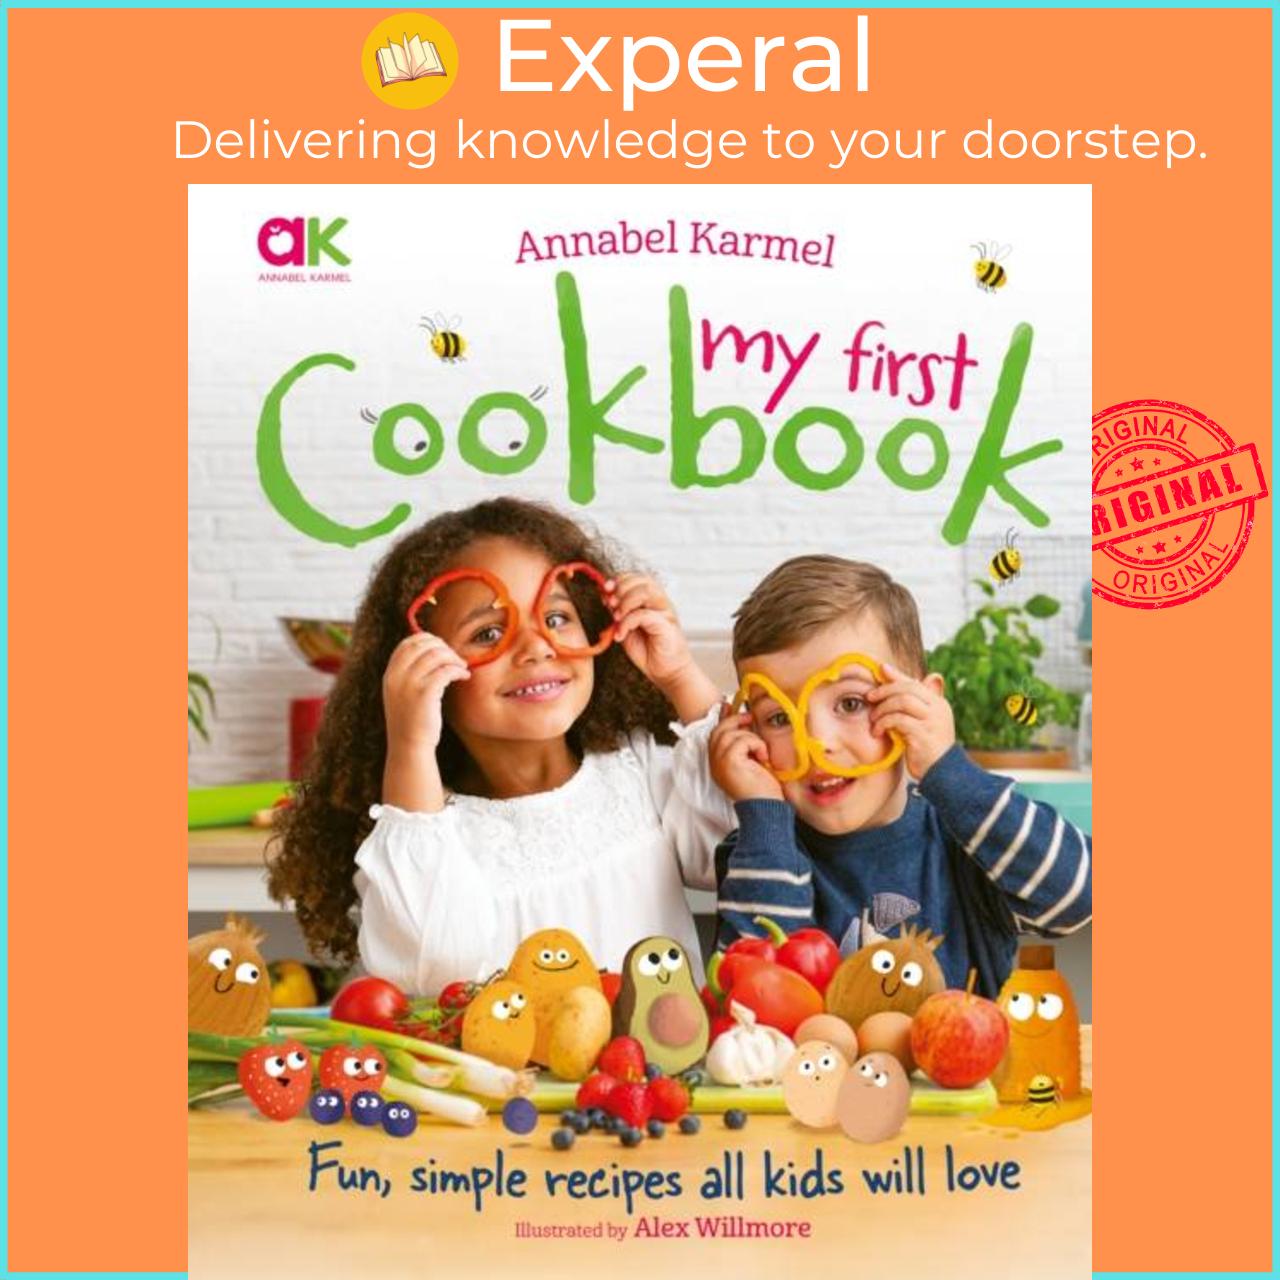 Hình ảnh Sách - Annabel Karmel's My First Cookbook by Alex Willmore (UK edition, hardcover)